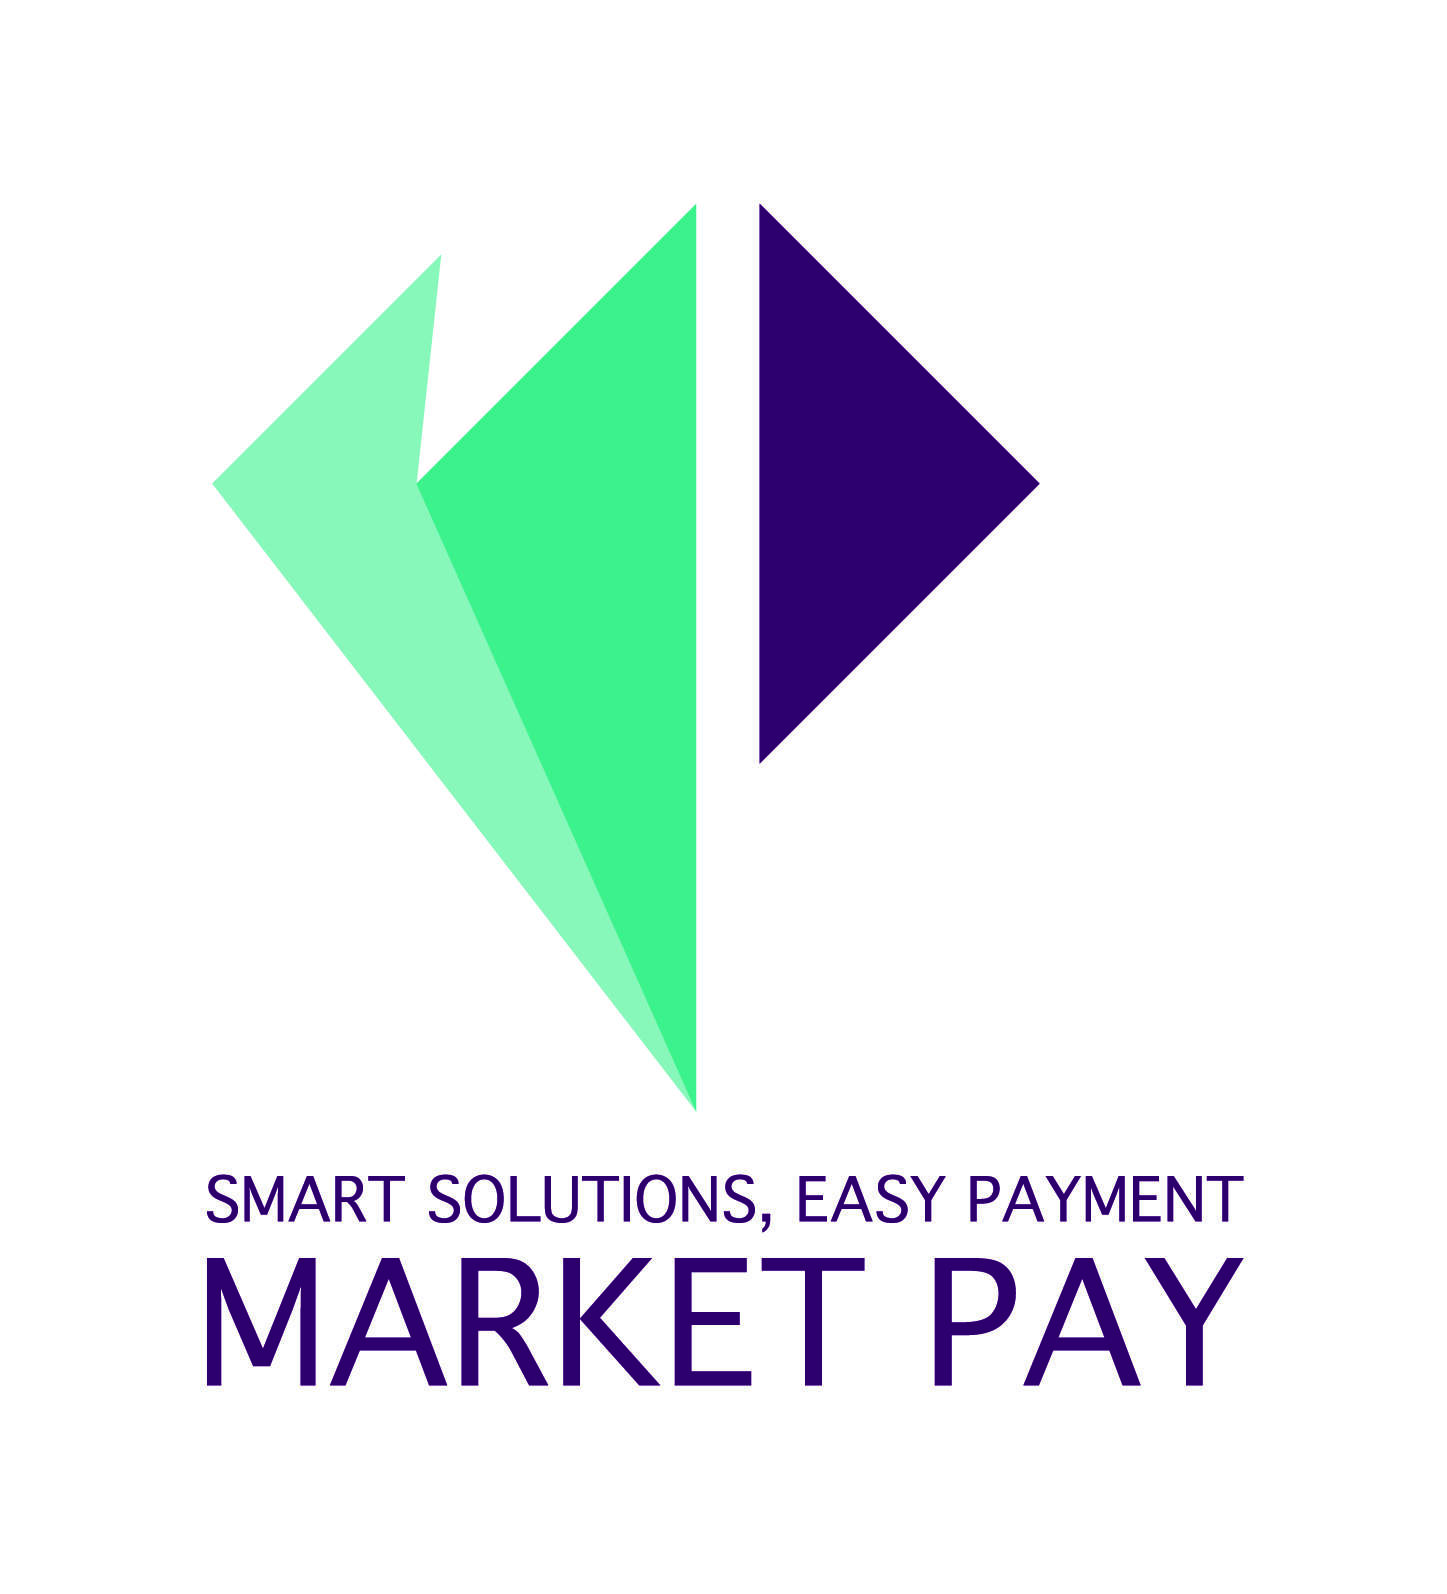 Google Pay Logo - Market Pay logo (2) - Electronic Payments International